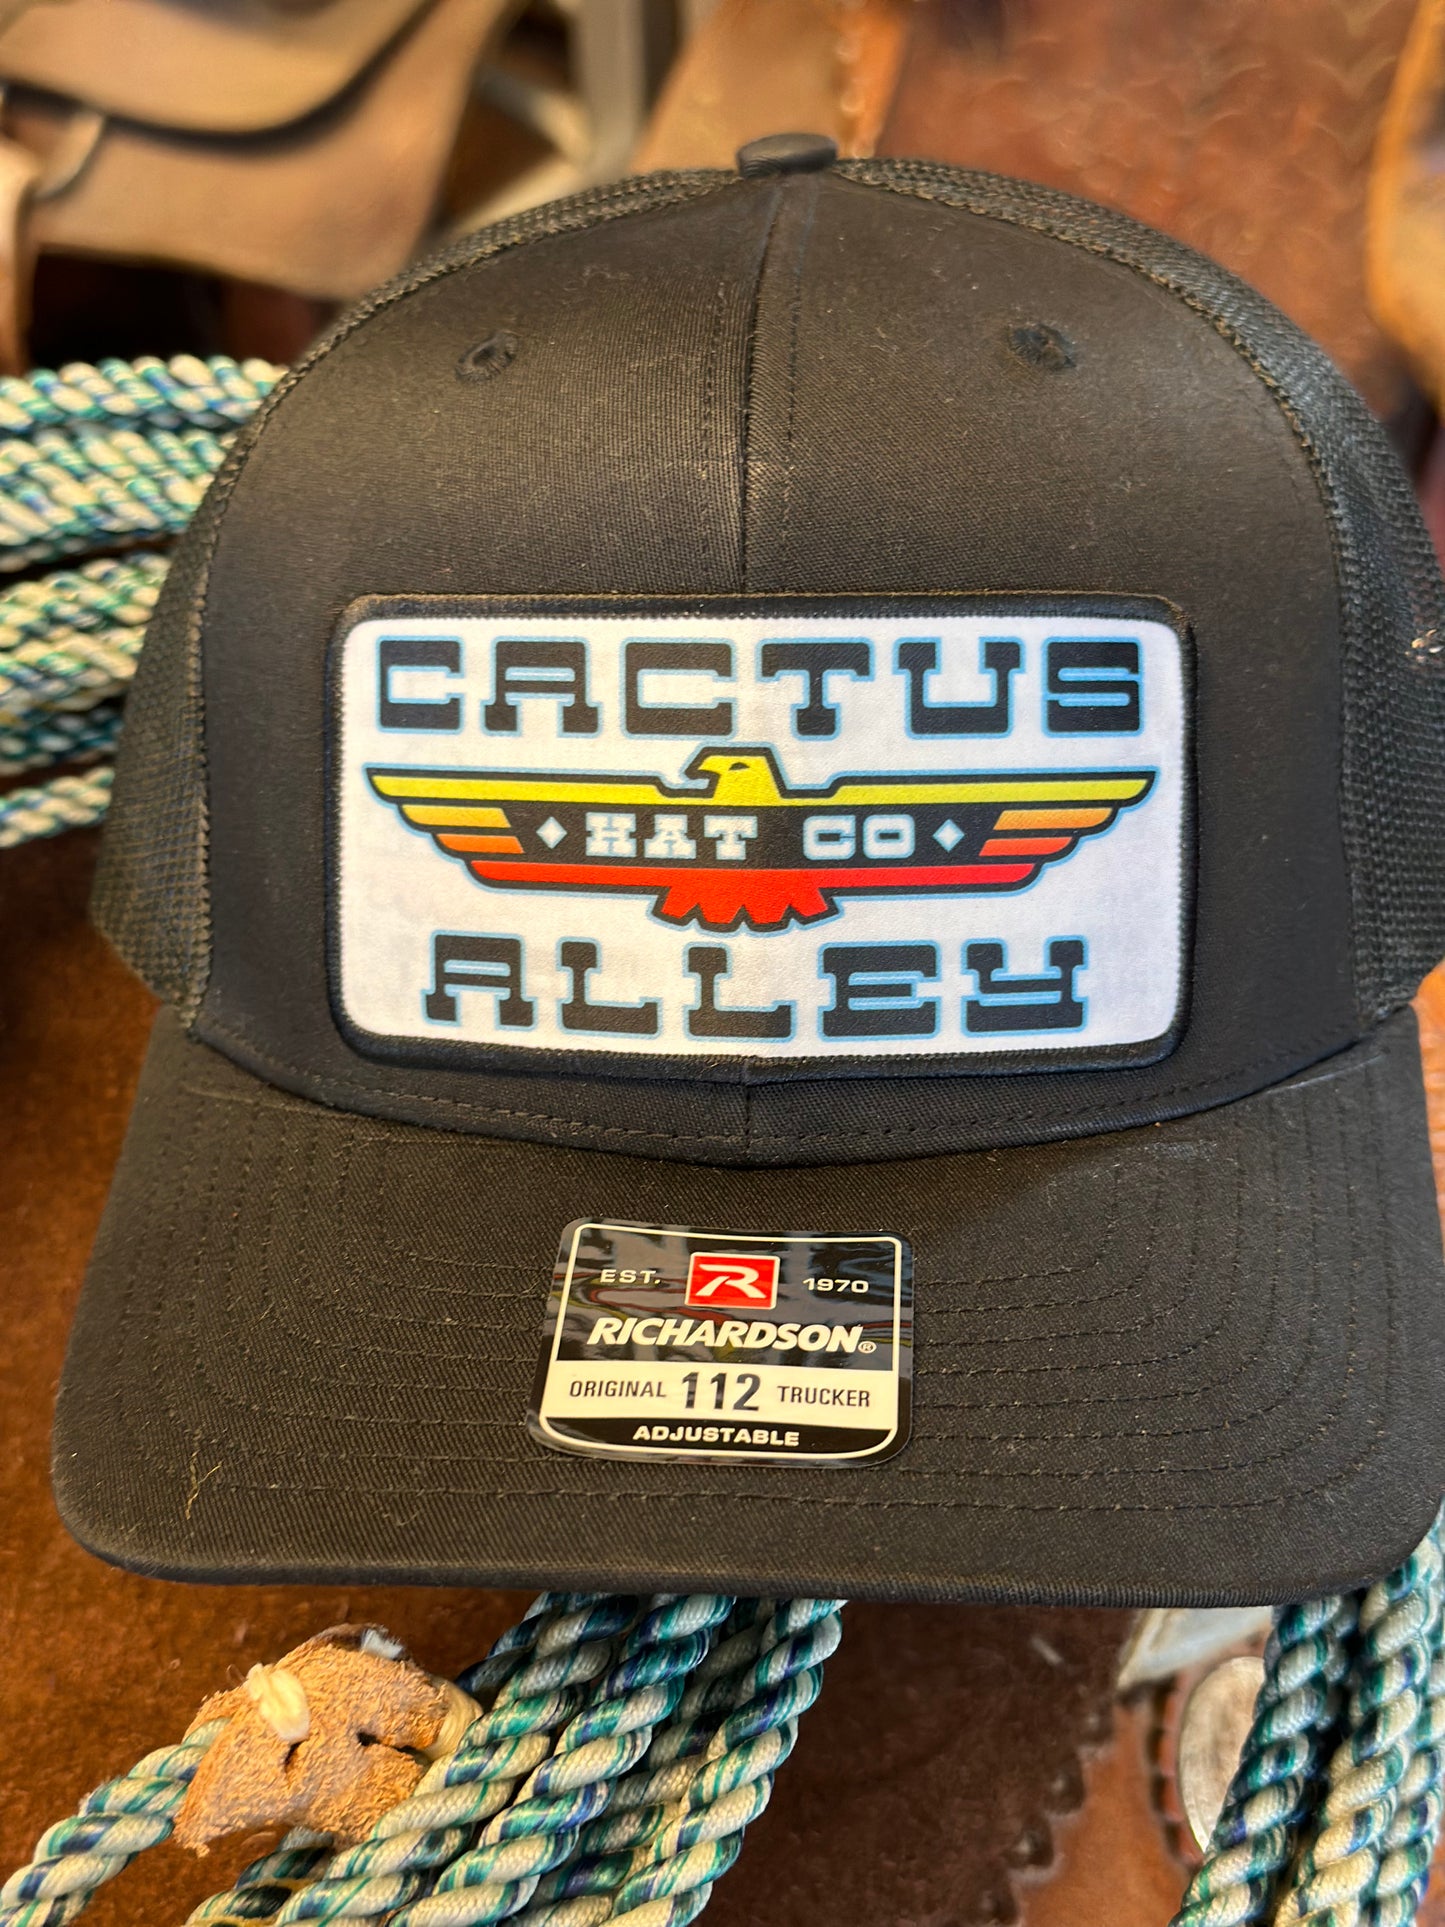 Thunderbird cactus Alley hat ￼